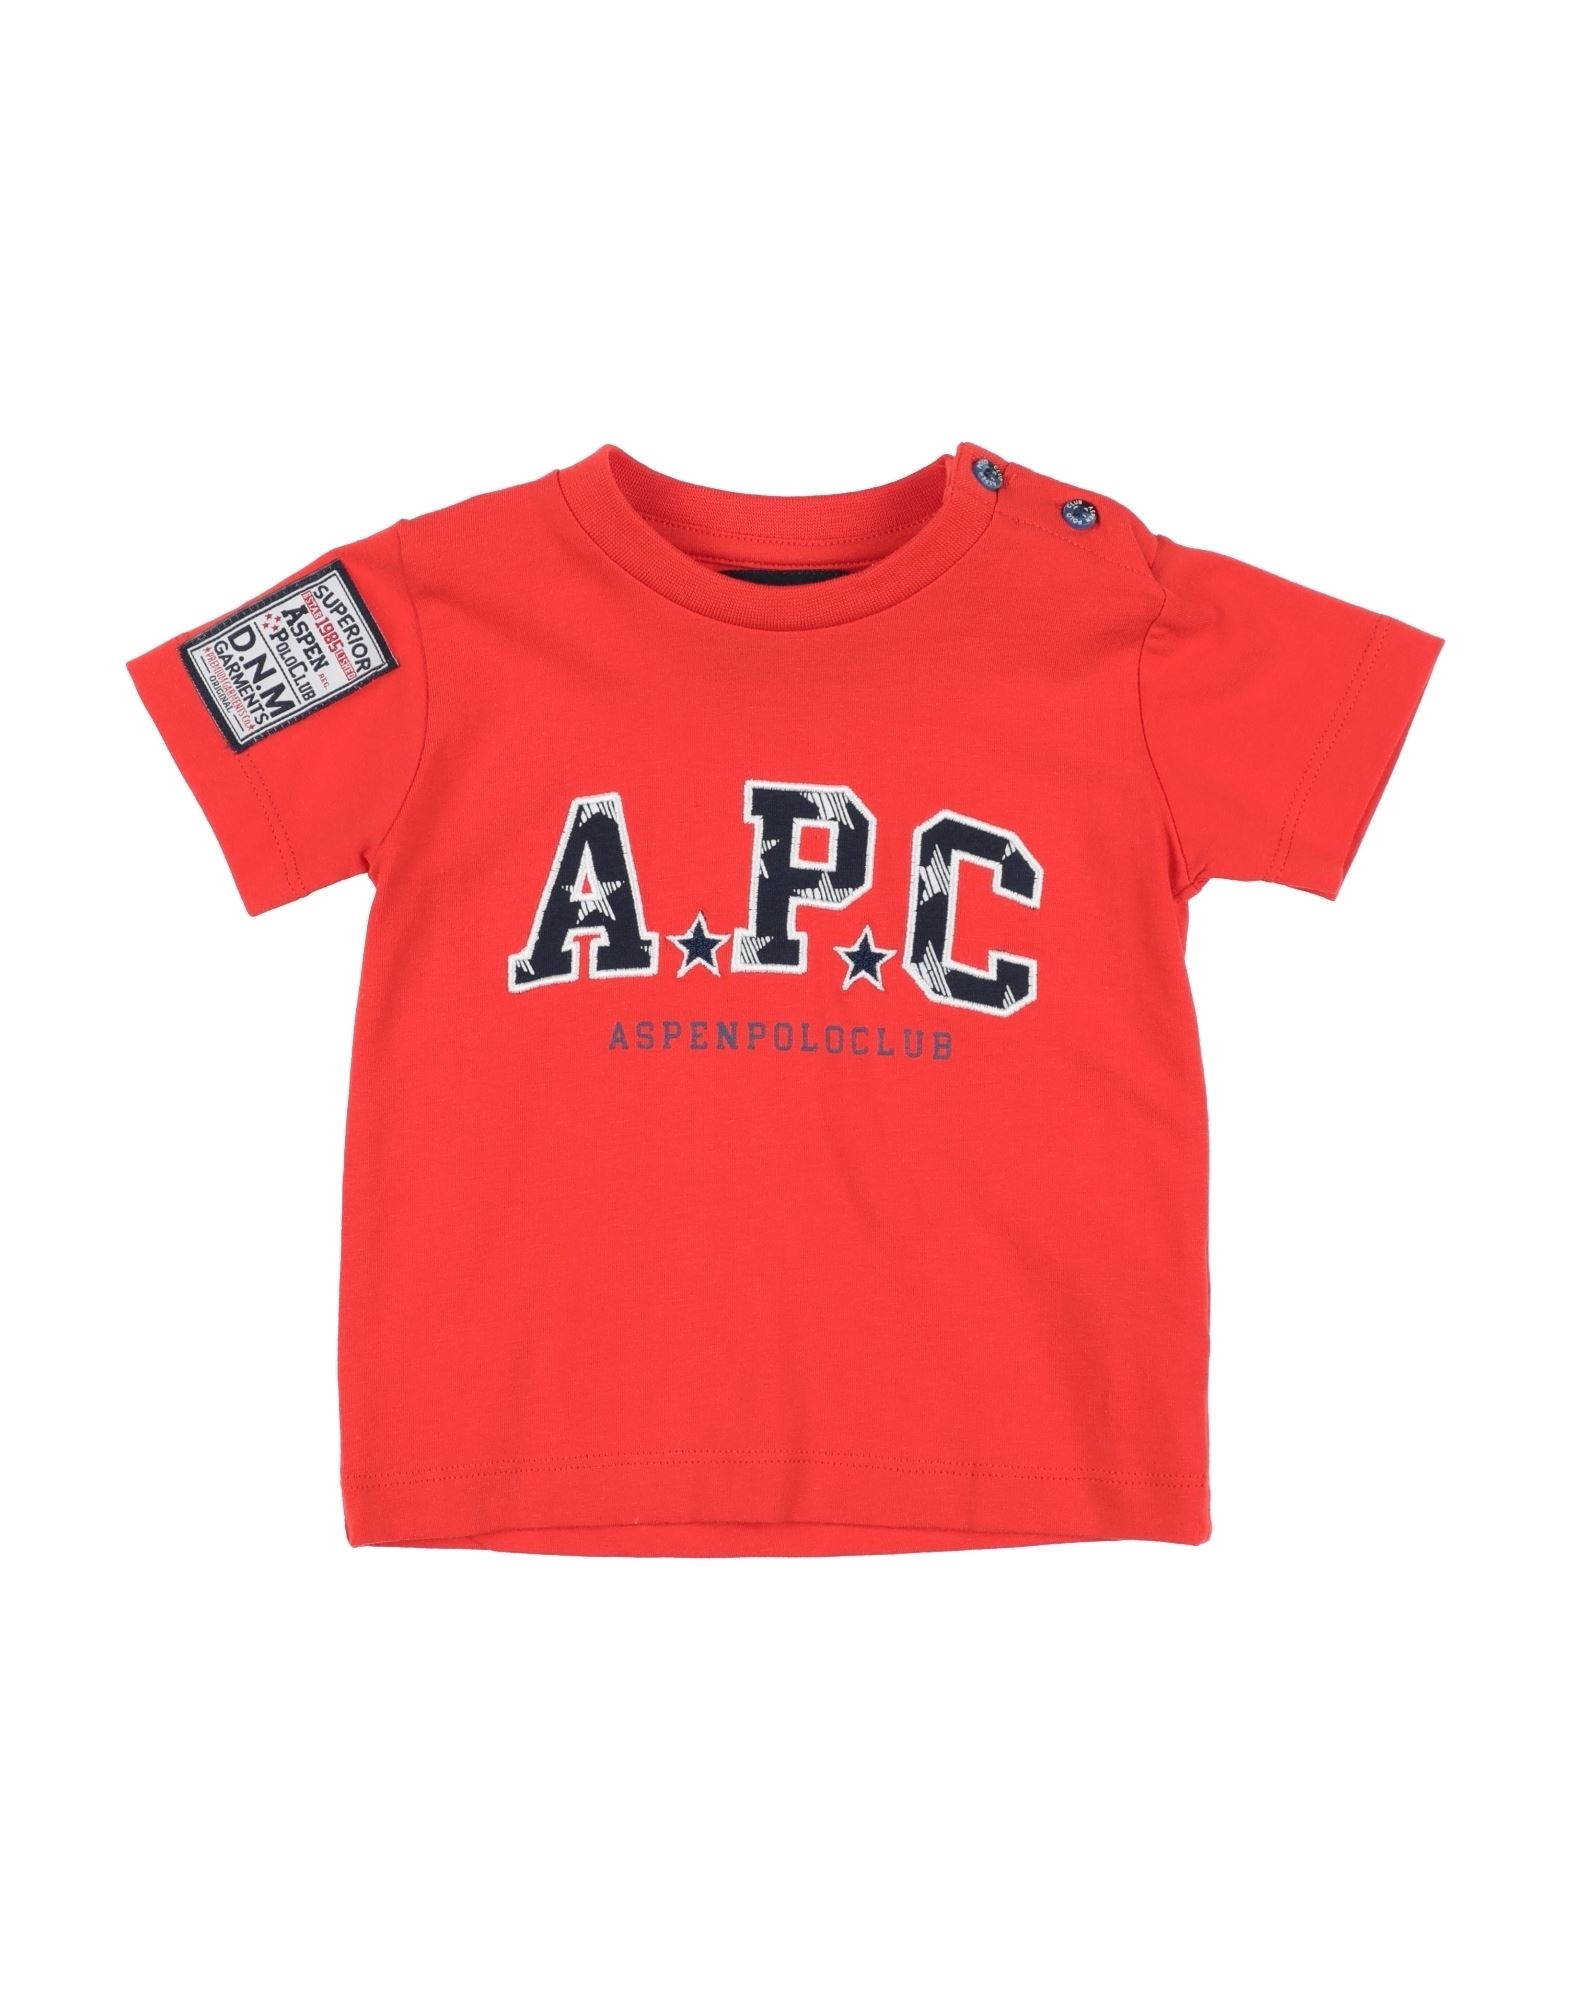 ASPEN POLO CLUB T-shirts Kinder Rot von ASPEN POLO CLUB